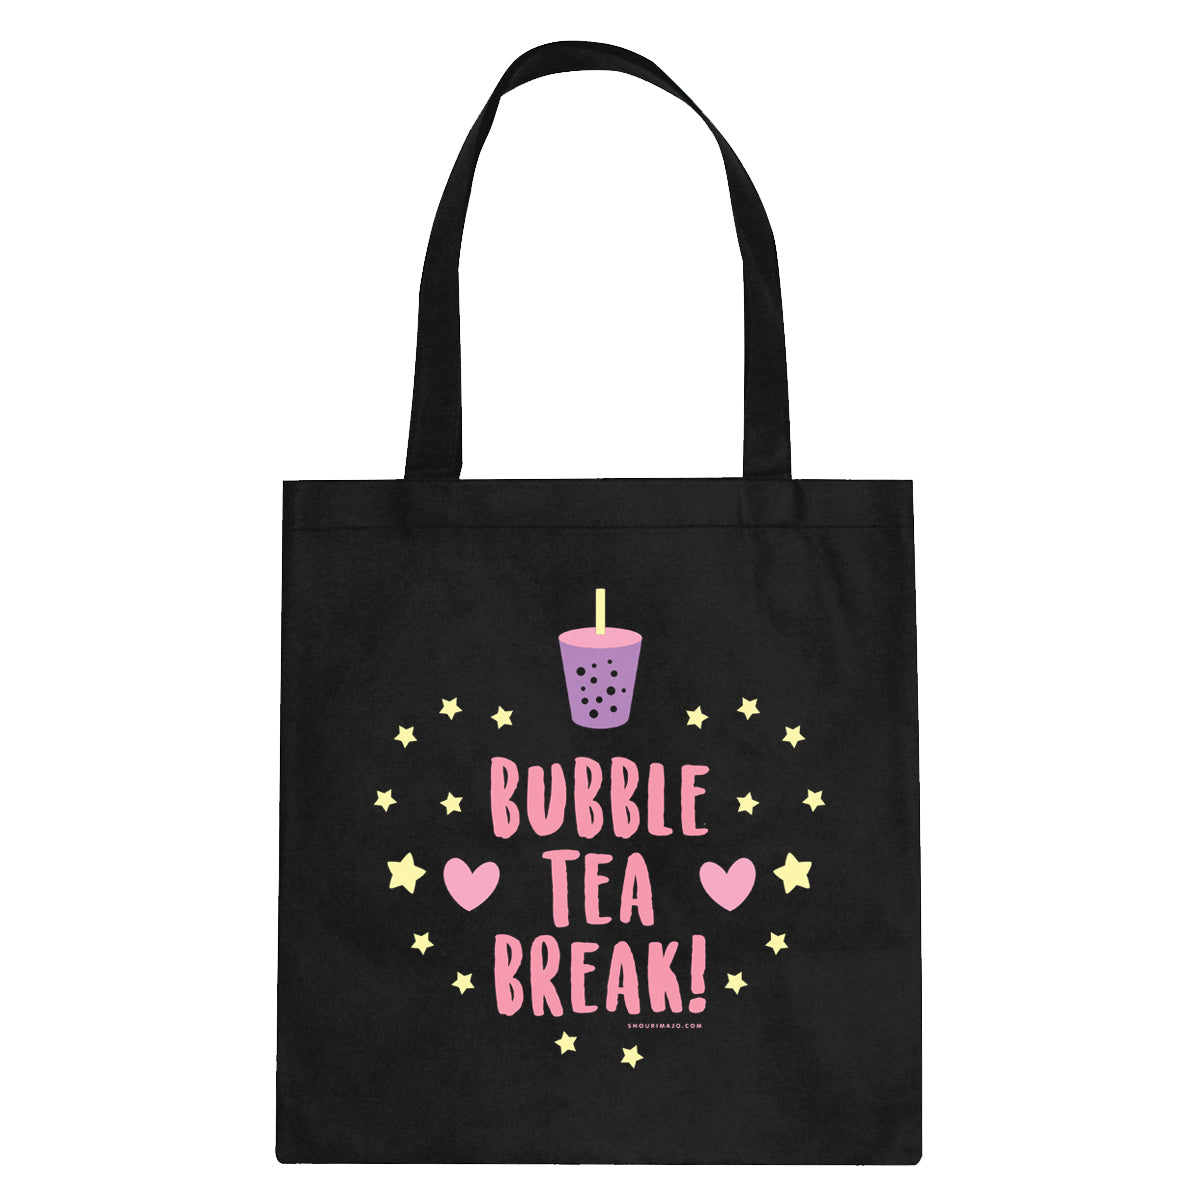 Bubble Tea Break! Tote Bag